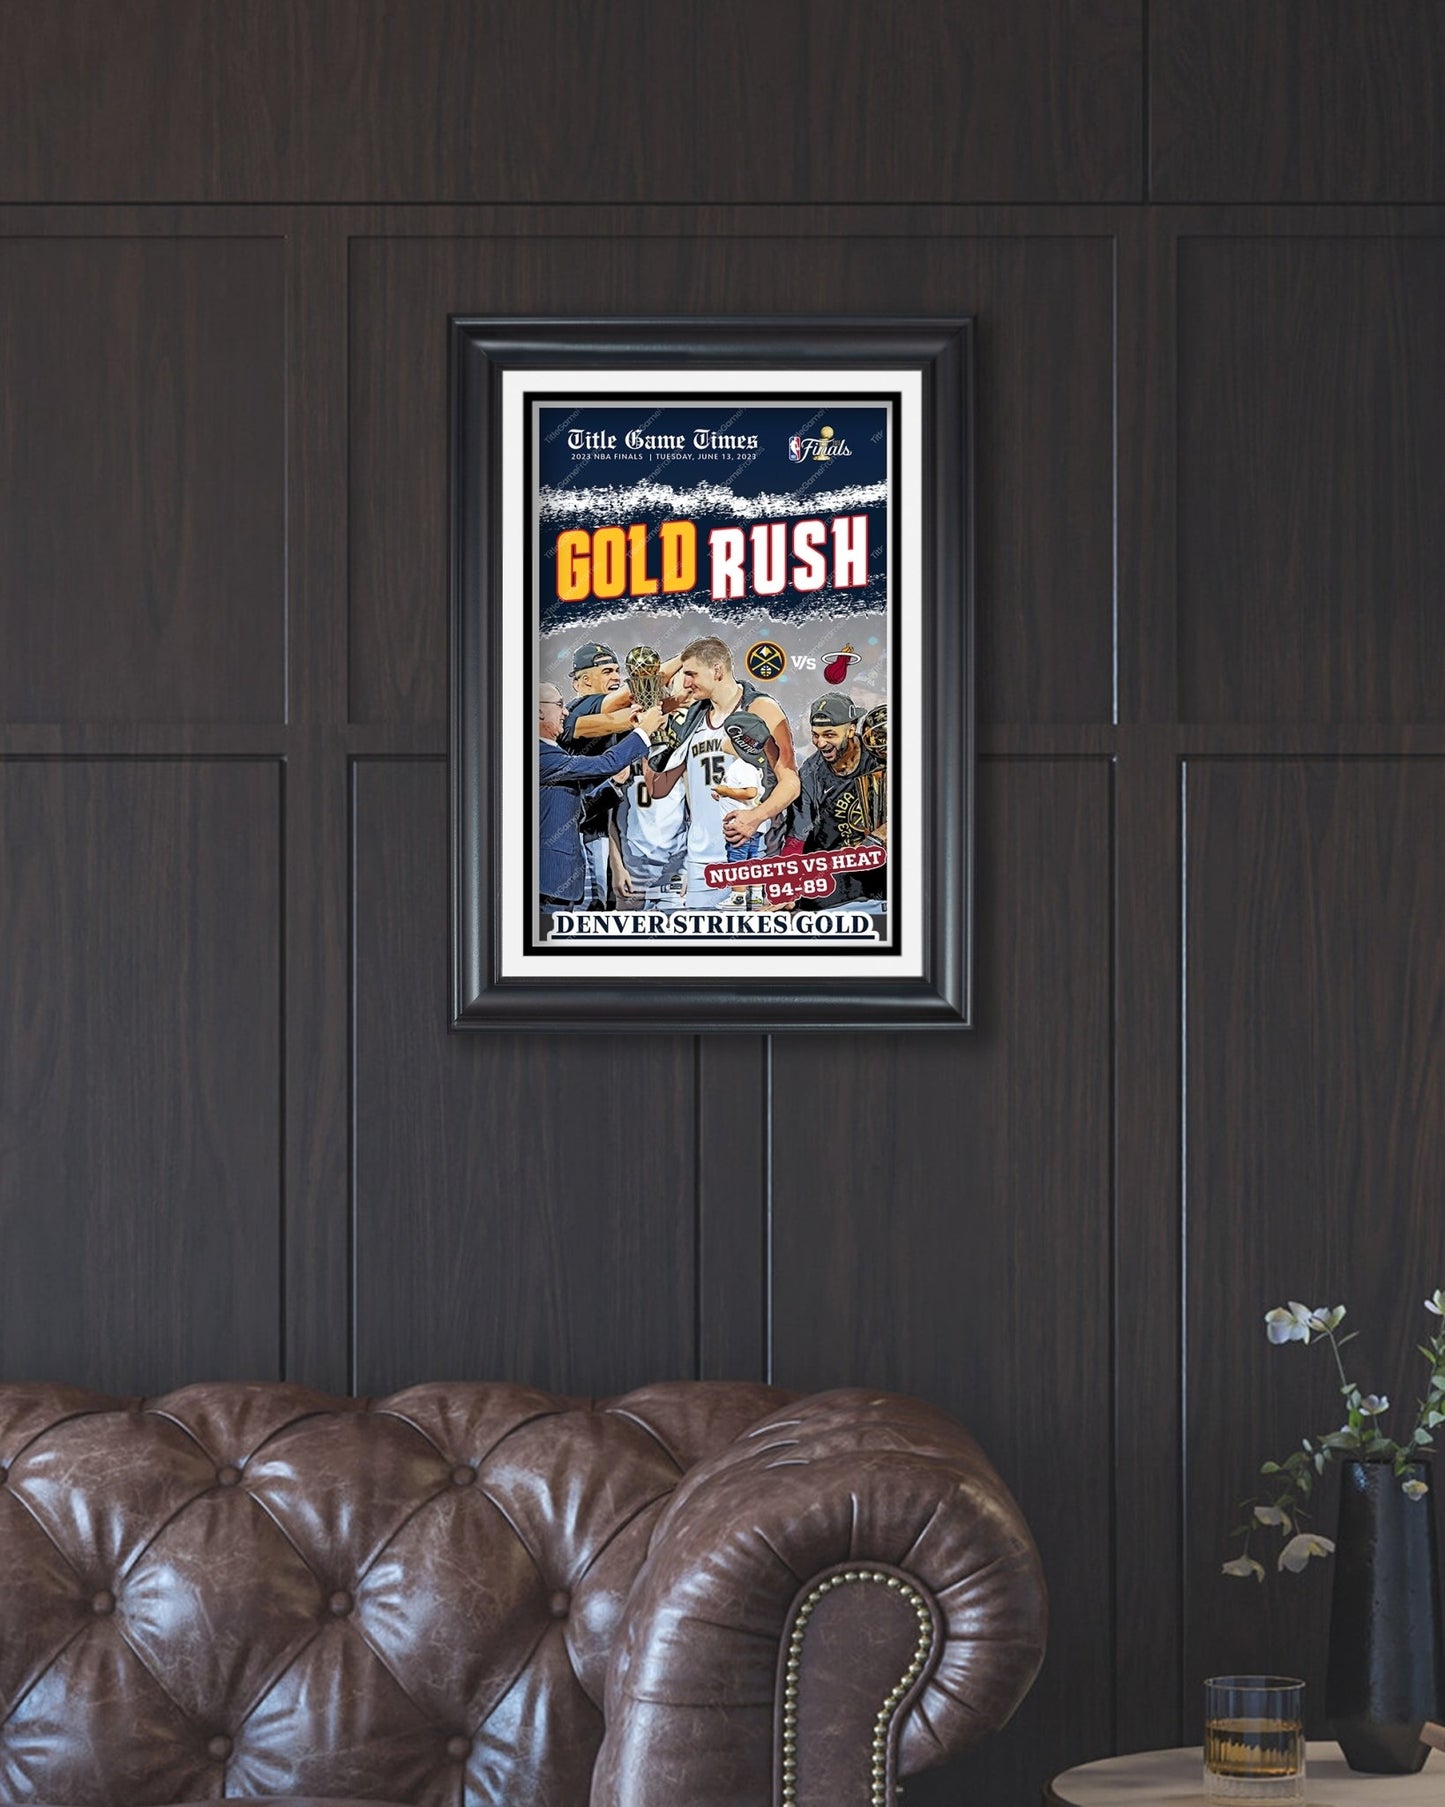 2023 Denver Nuggets NBA Champions 'GOLD RUSH' Framed Front Page Newspaper - Title Game Frames